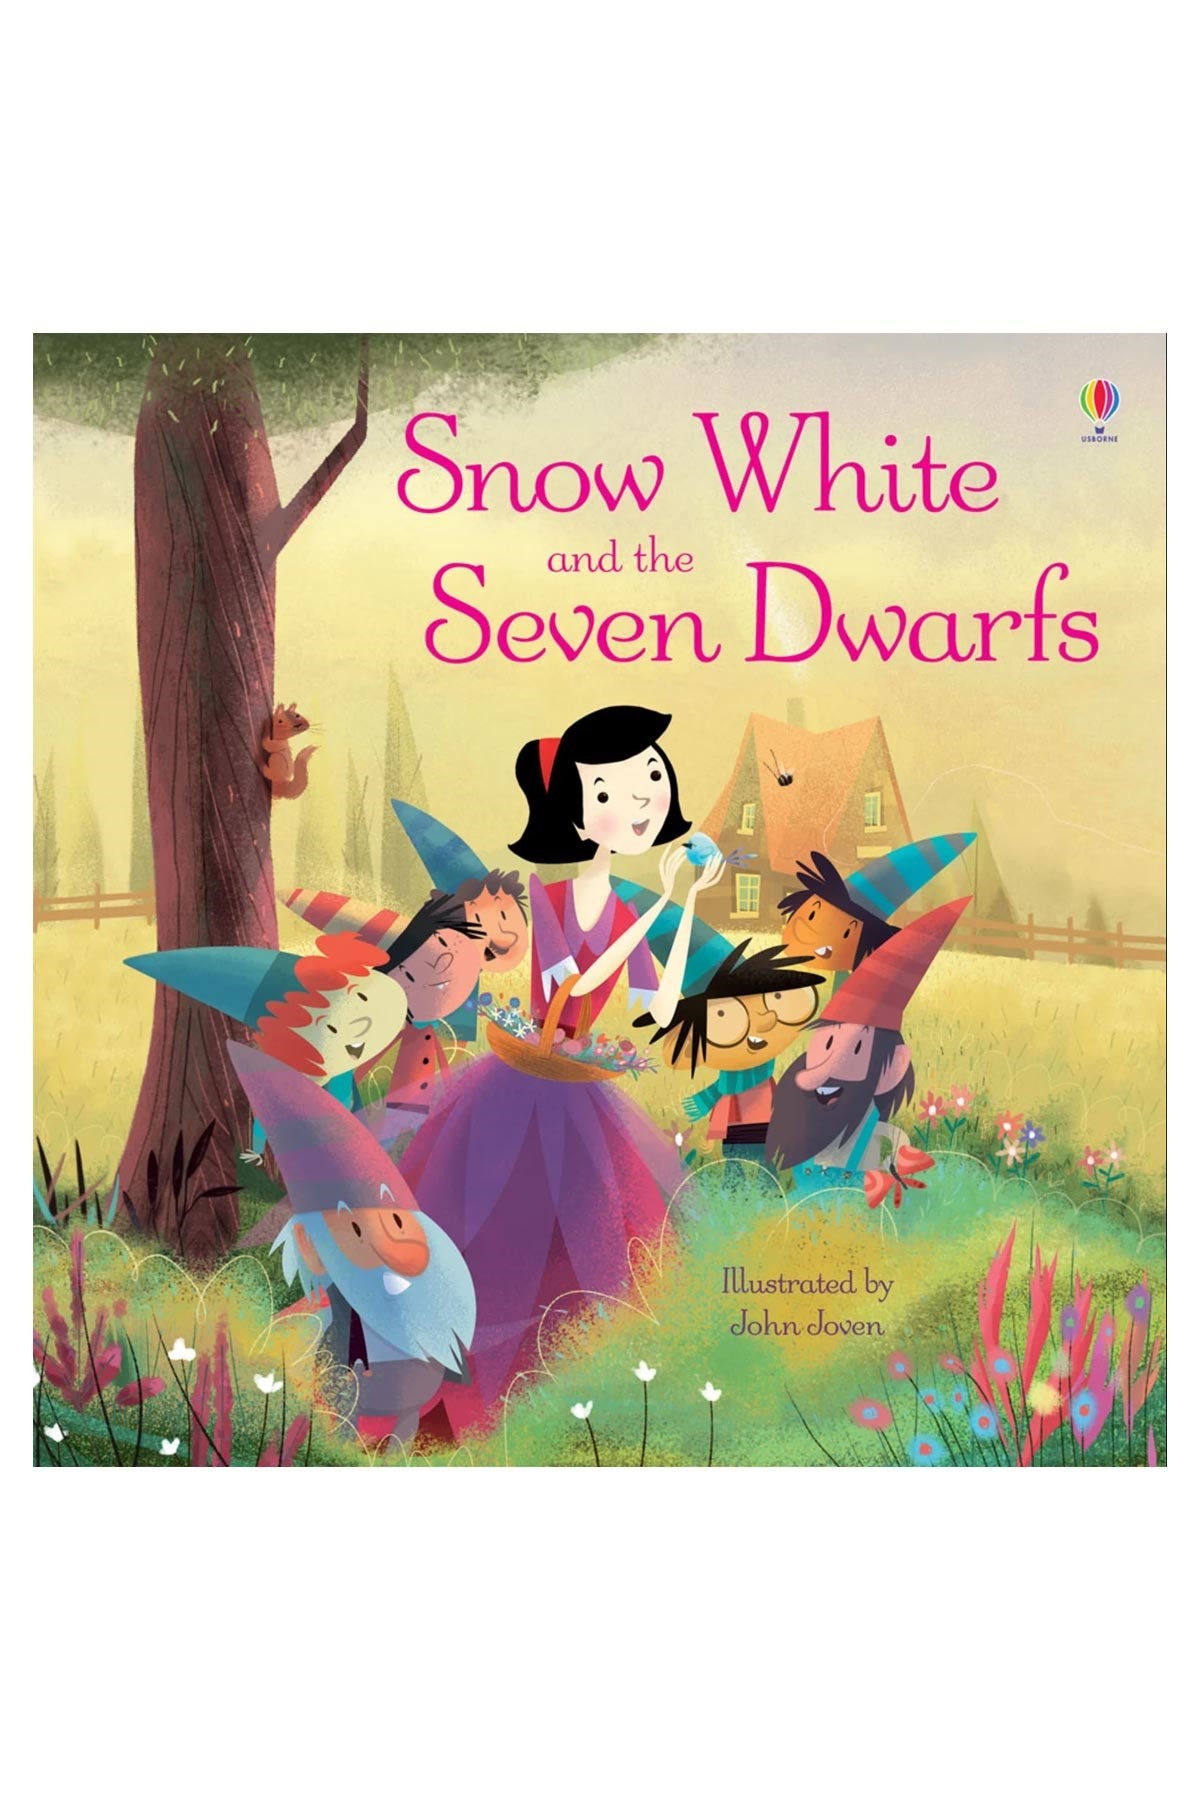 The Usborne Snow White And The Seven Dwarfs